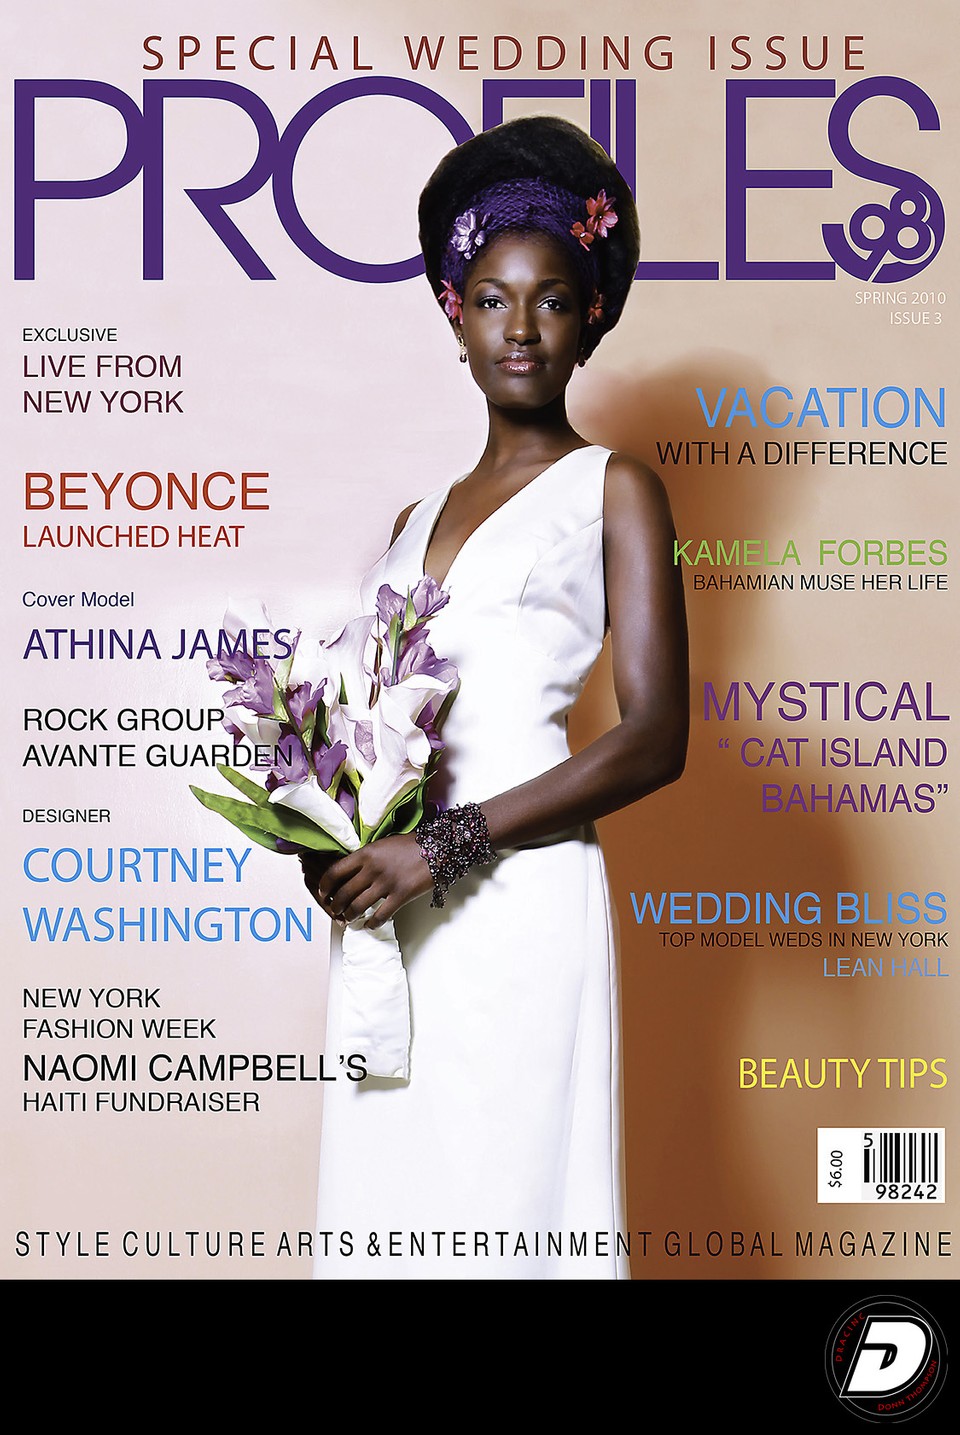 Profiles98 Magazine Spring 2010 Cover Photographer 